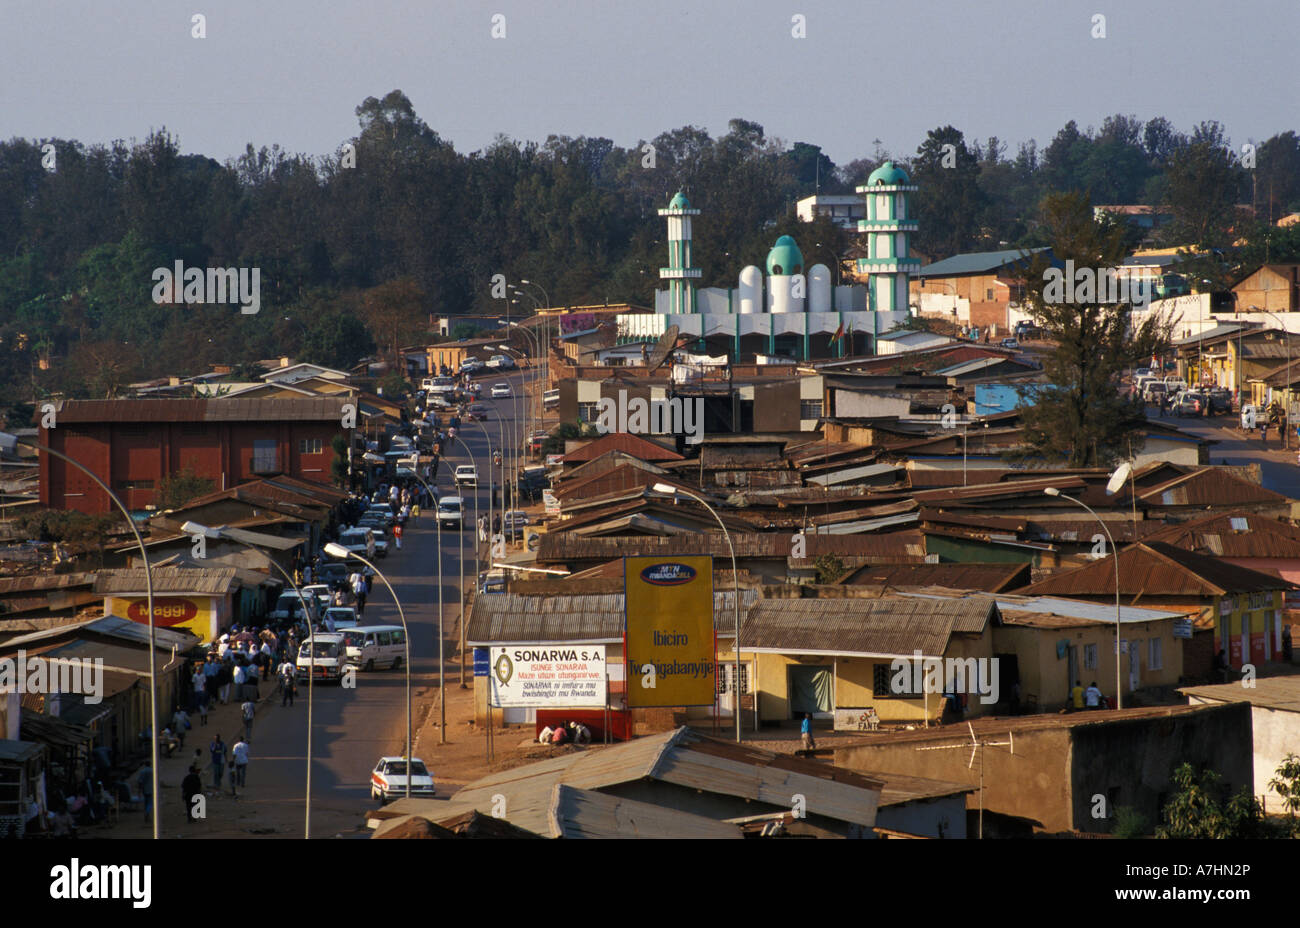 Le quartier musulman dans le quartier de Nyamirambo, à Kigali, Rwanda Banque D'Images